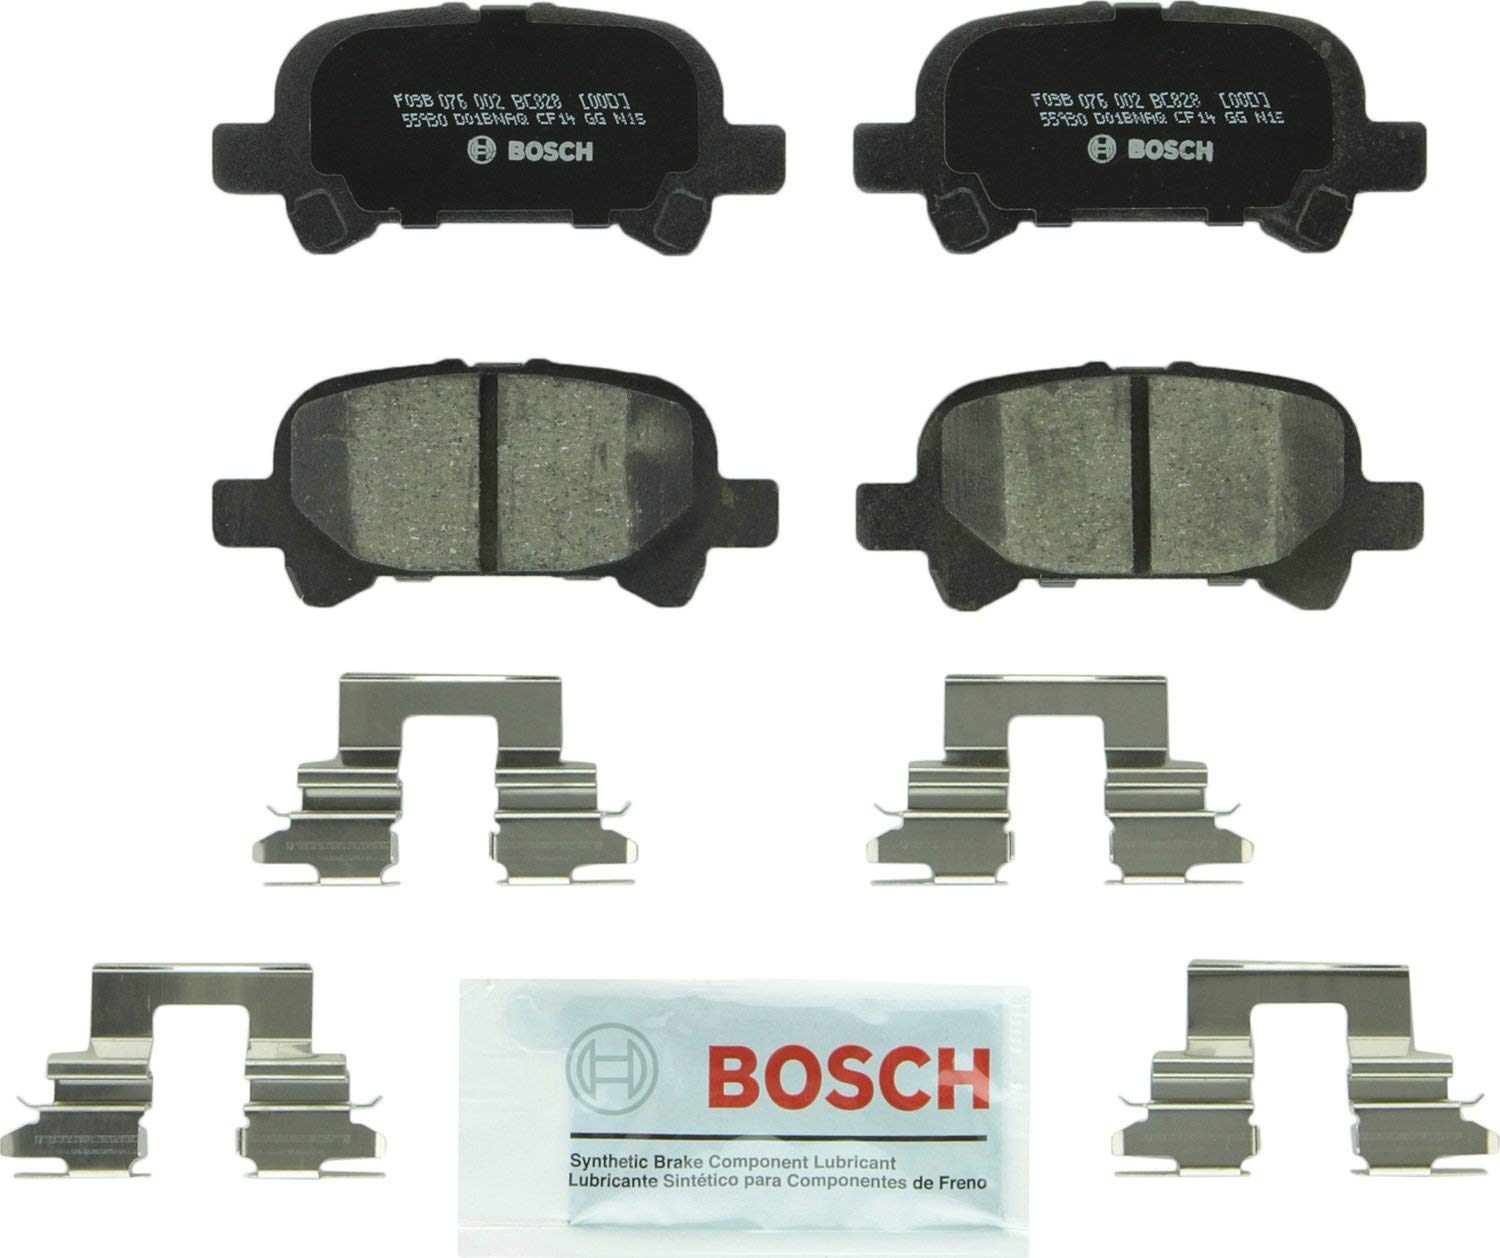 Bosch BC828 QuietCast Premium Ceramic Disc Brake Pad Set For Toyota: 2000-2007 Avalon, 2000-2006 Camry, 2000-2008 Solara; Rear